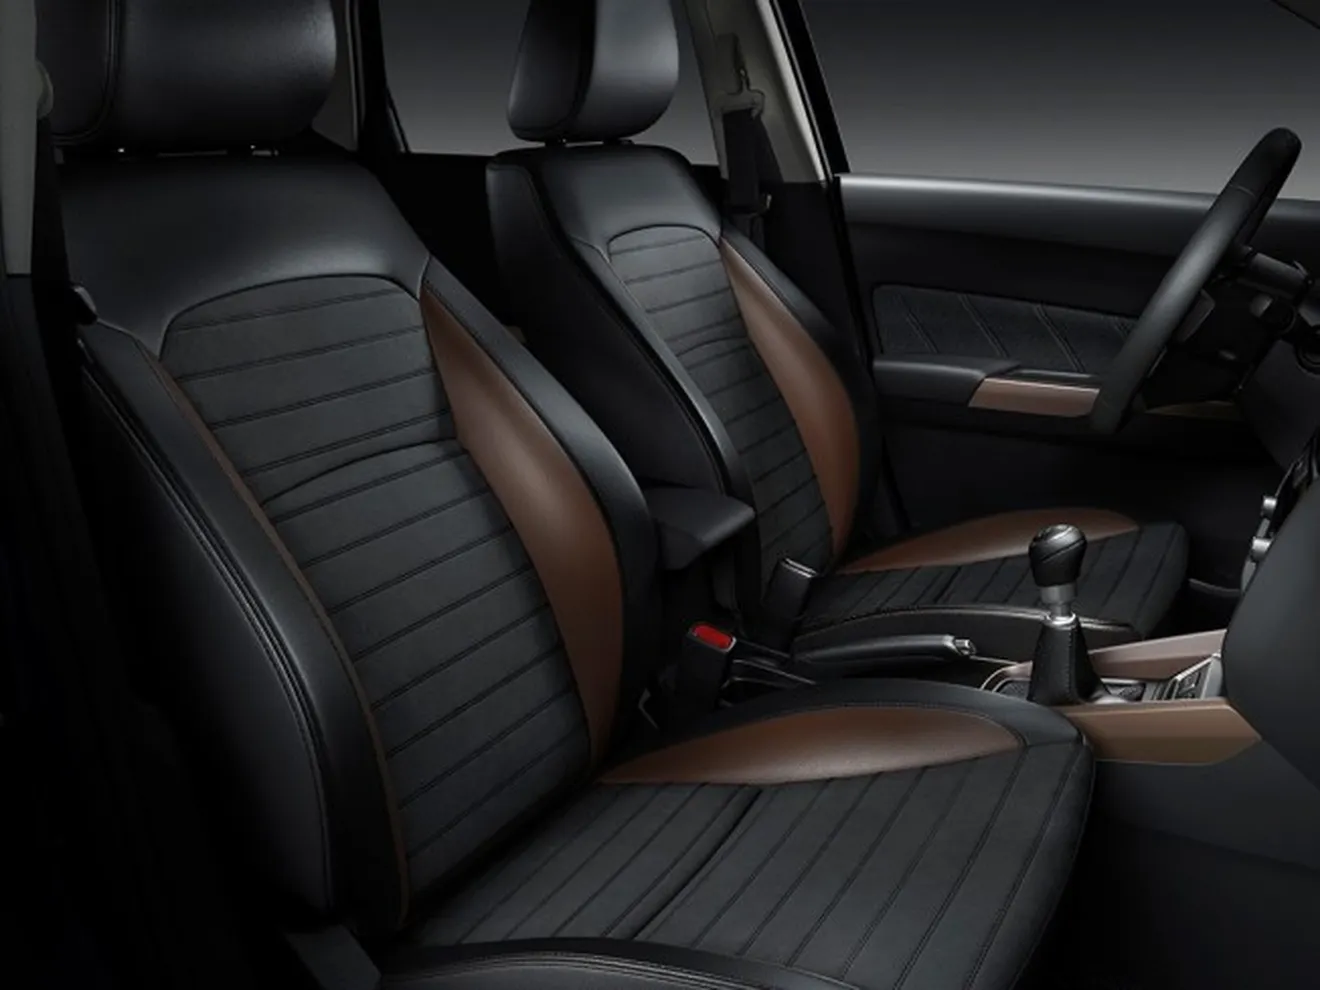 Suzuki Vitara Special Edition - interior